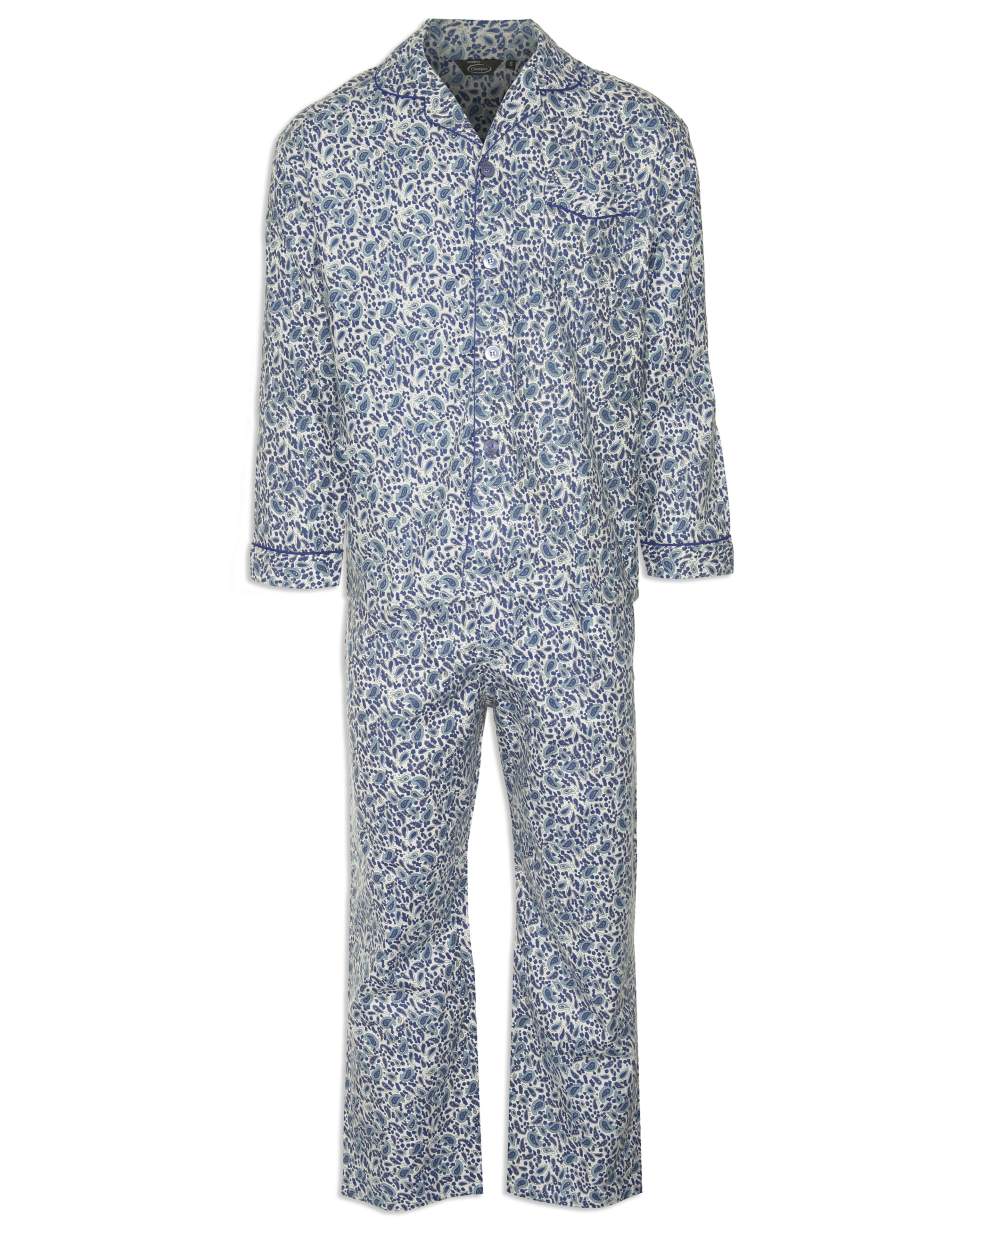 Champion Paisley Pyjamas 100% Cotton in Blue 